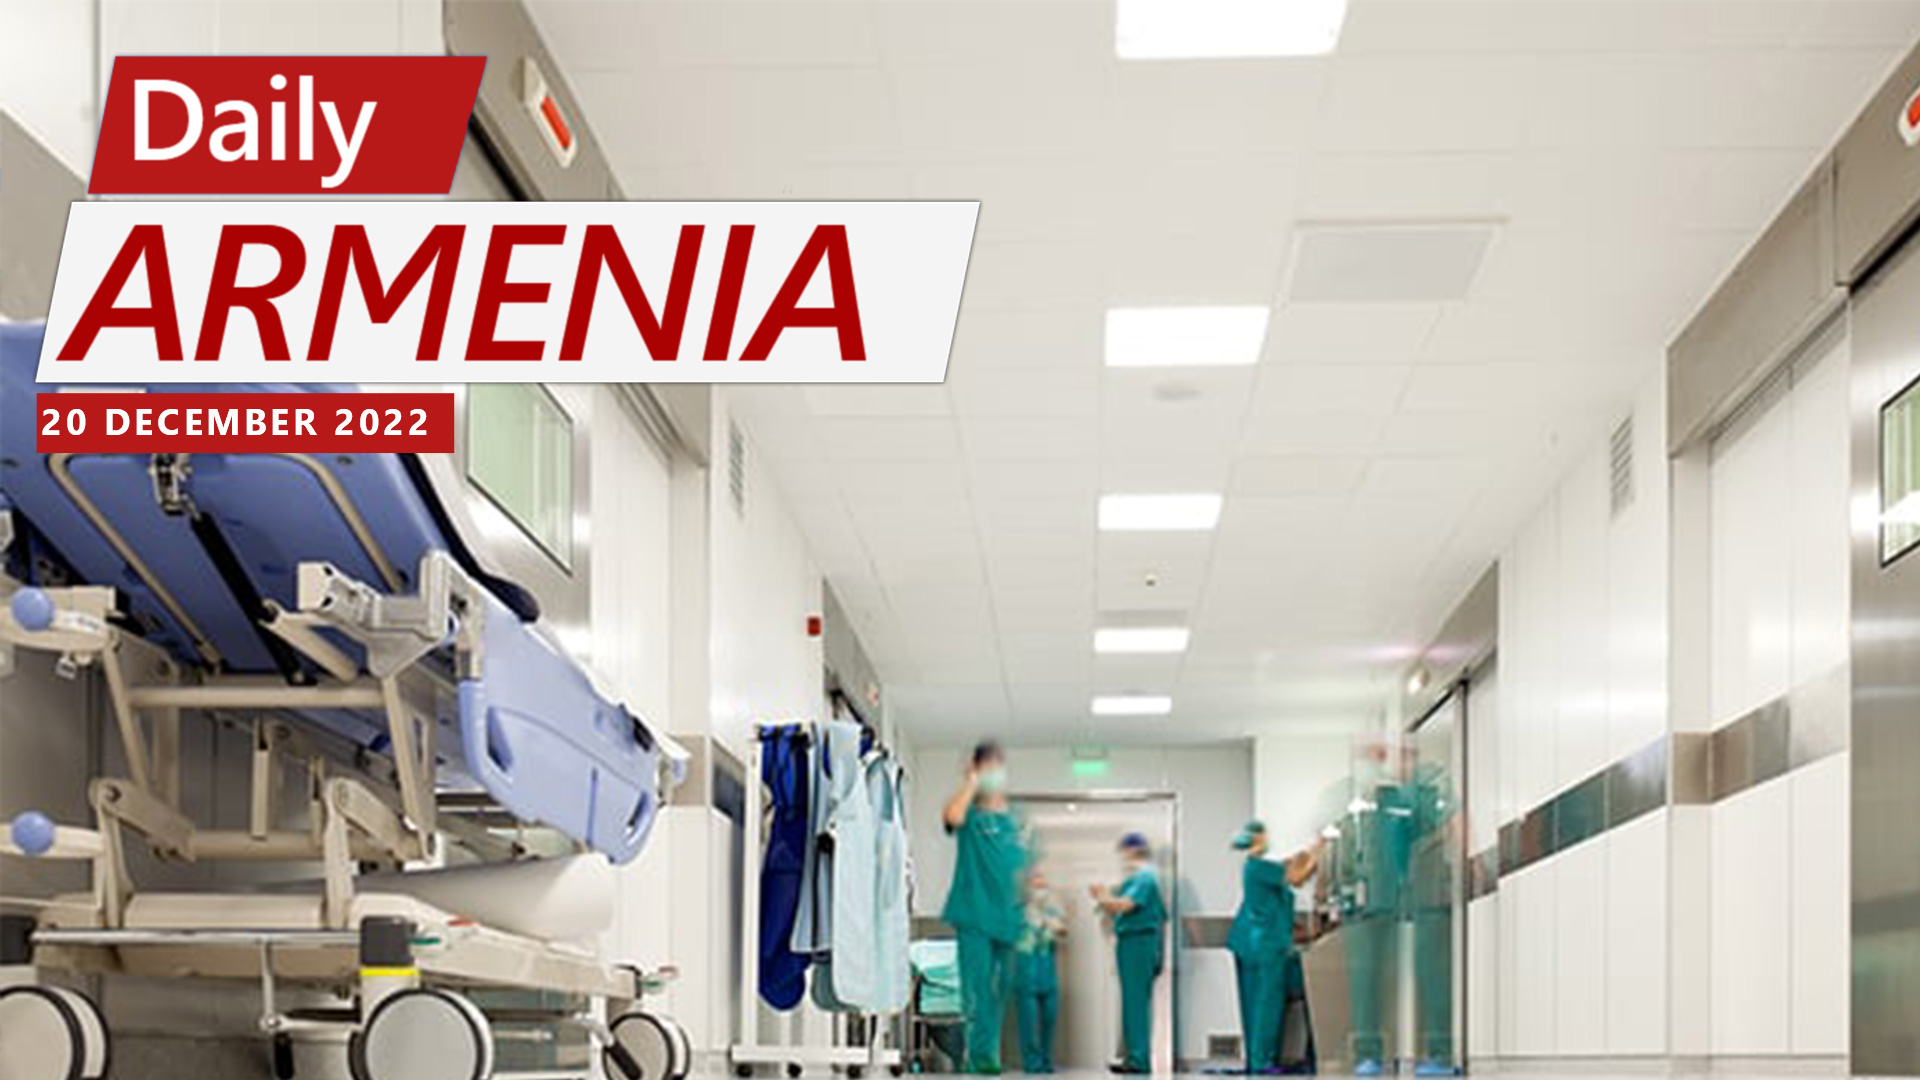 Hospital patient dies in Artsakh as blockade enters 9th day